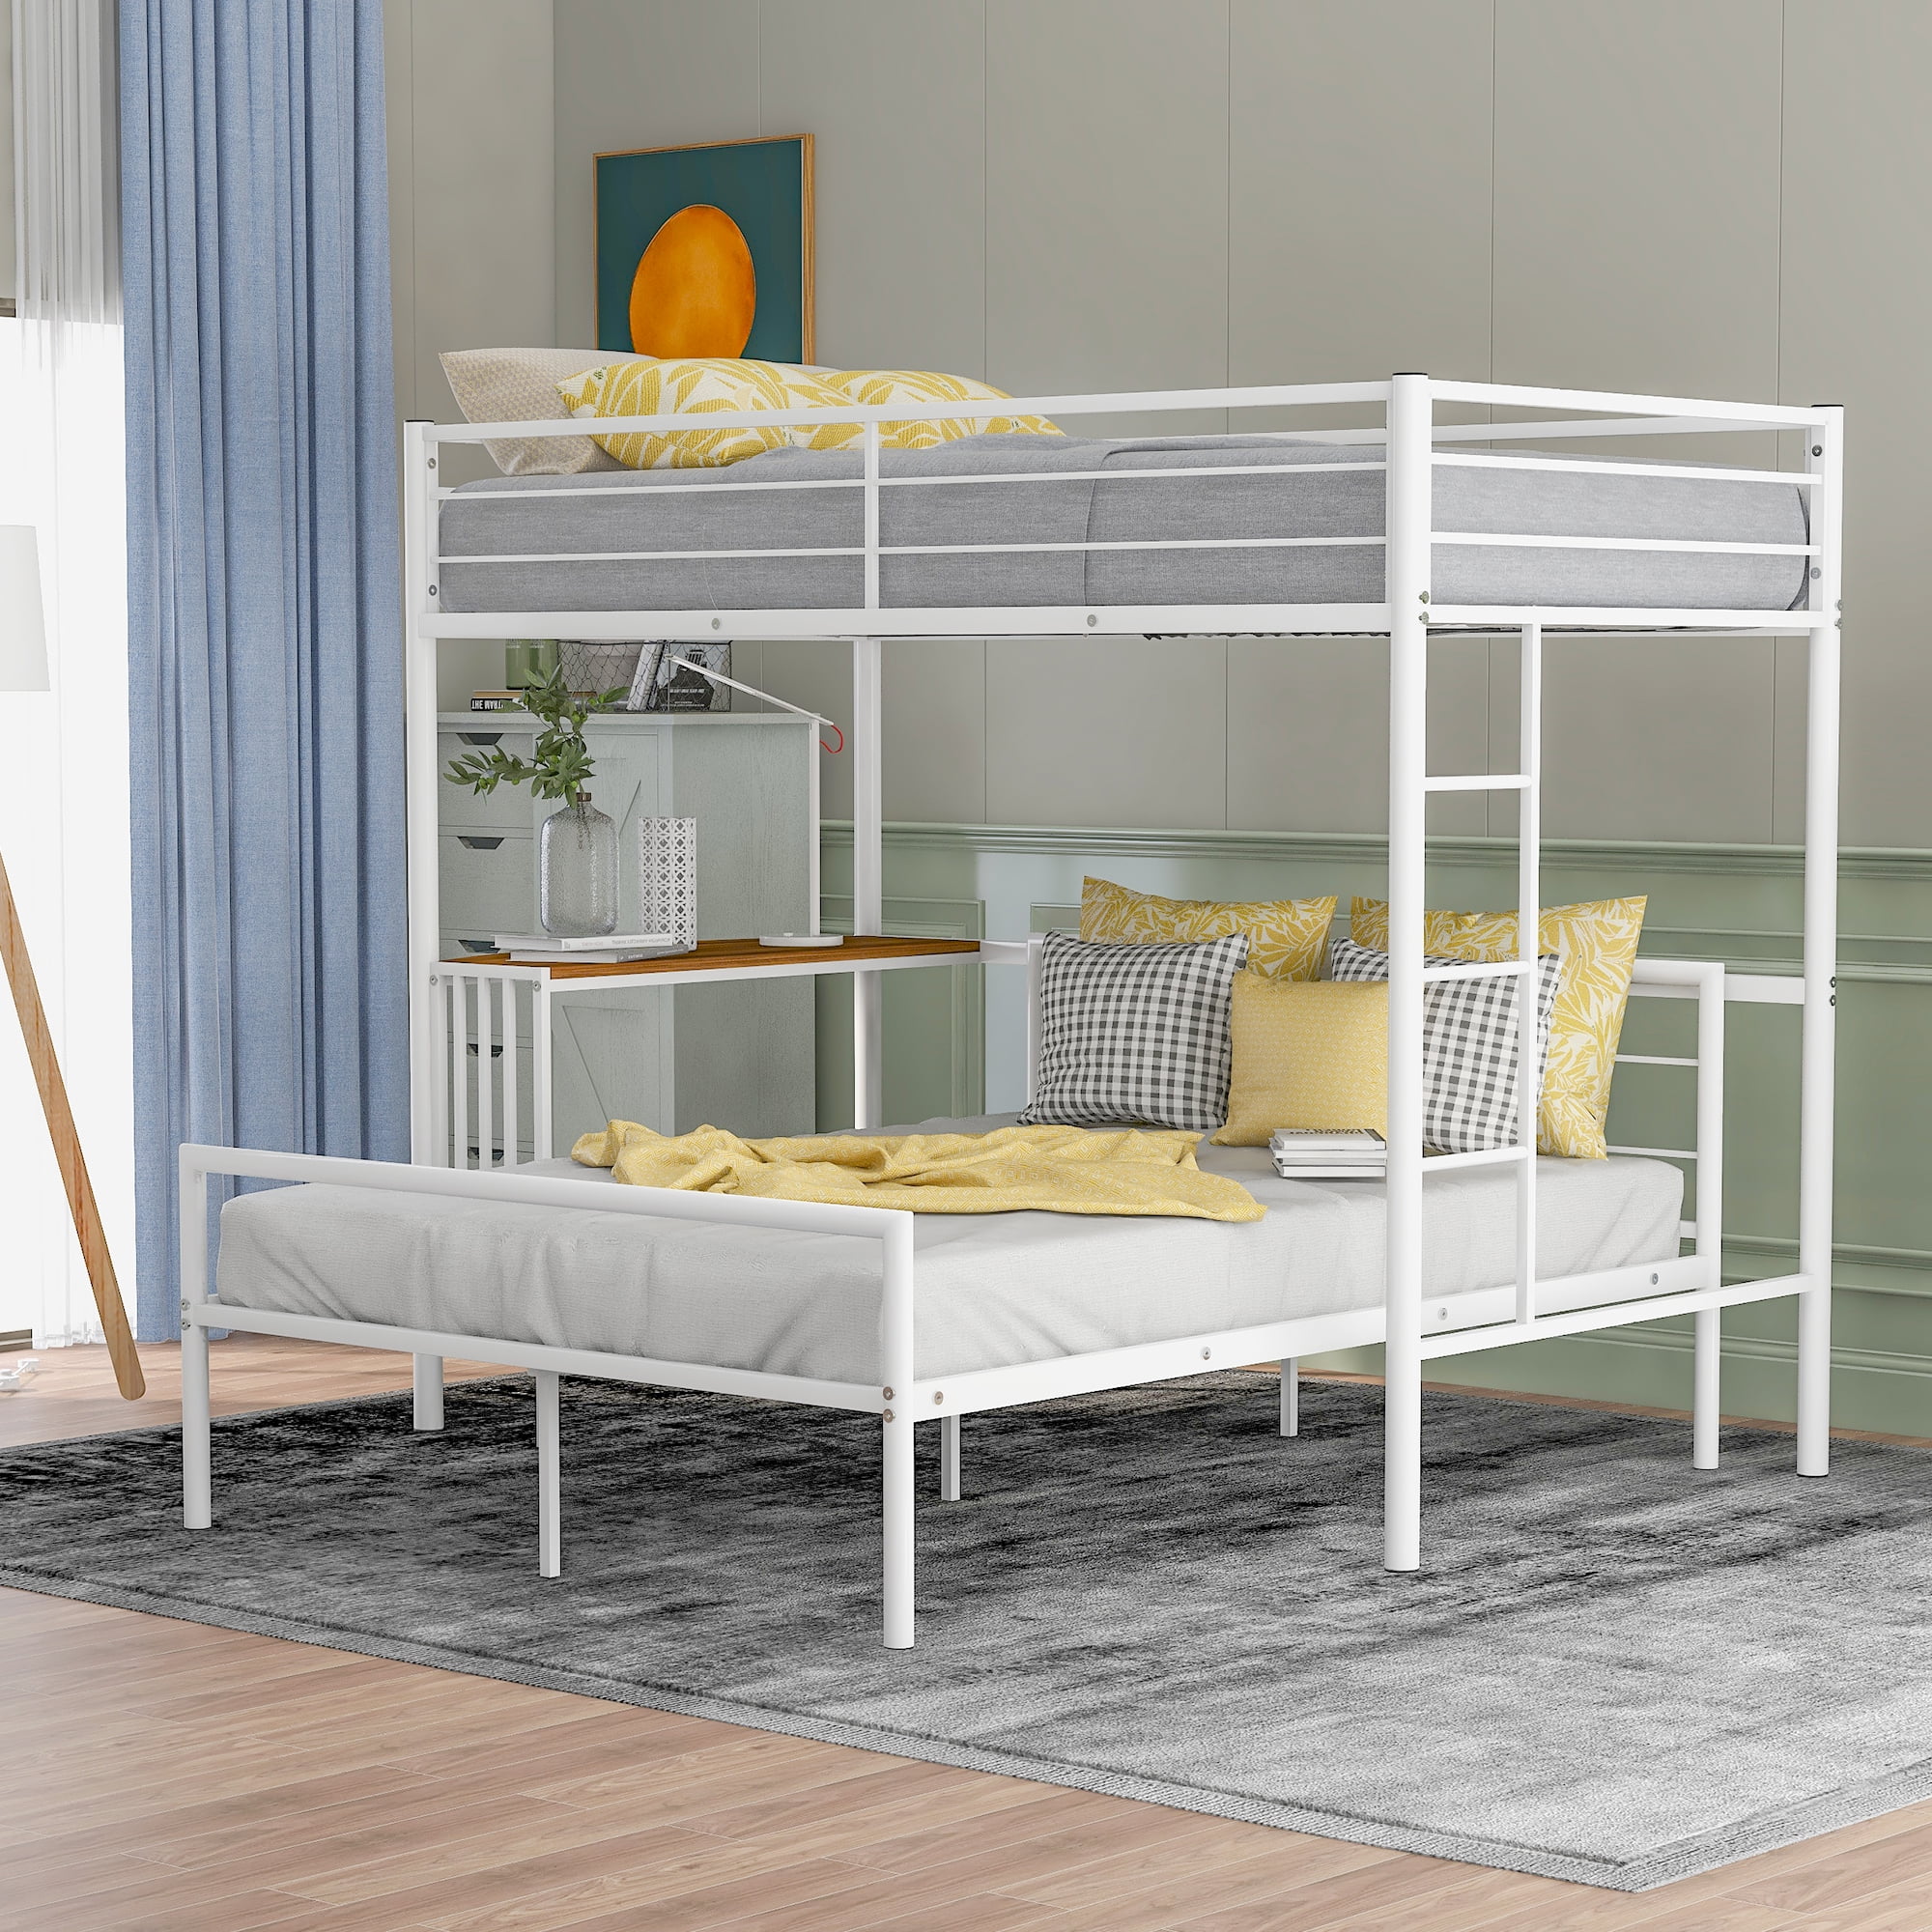 Metal Bunk Beds Twin Over Full Bed Frame Kids Teens Adult Dorm Bedroom Furniture 